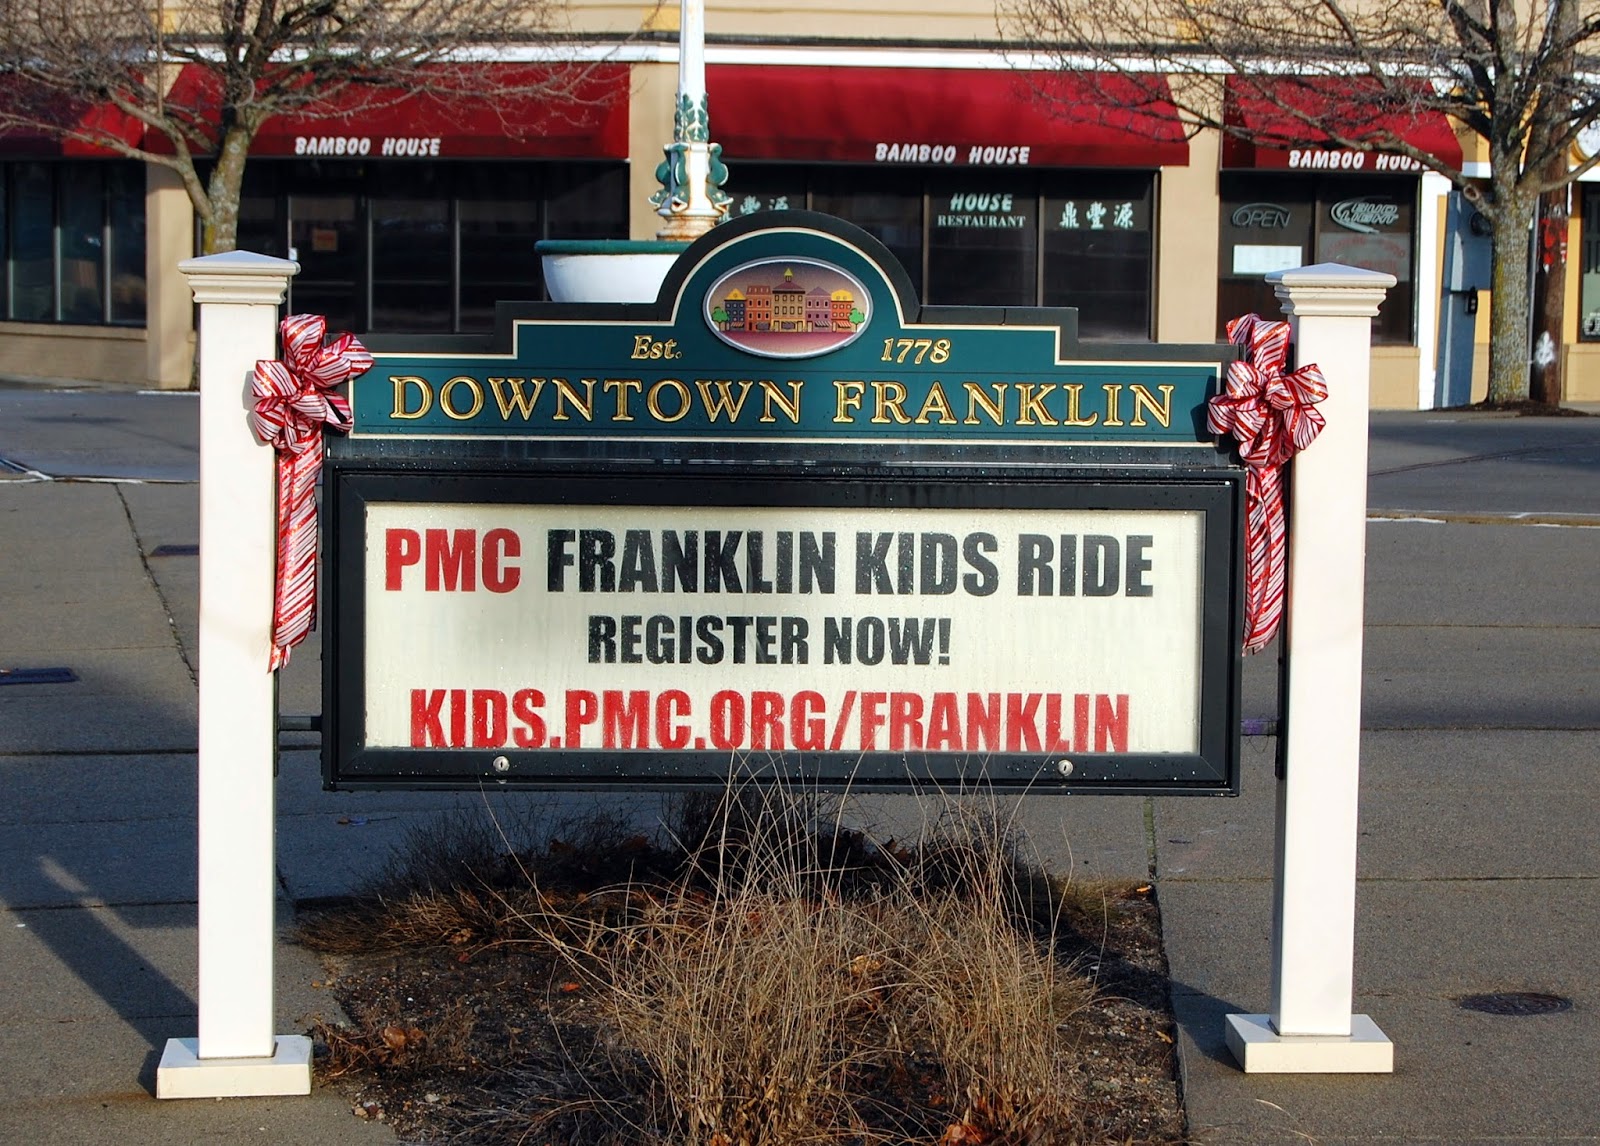 PMC Kids ride - June 15th